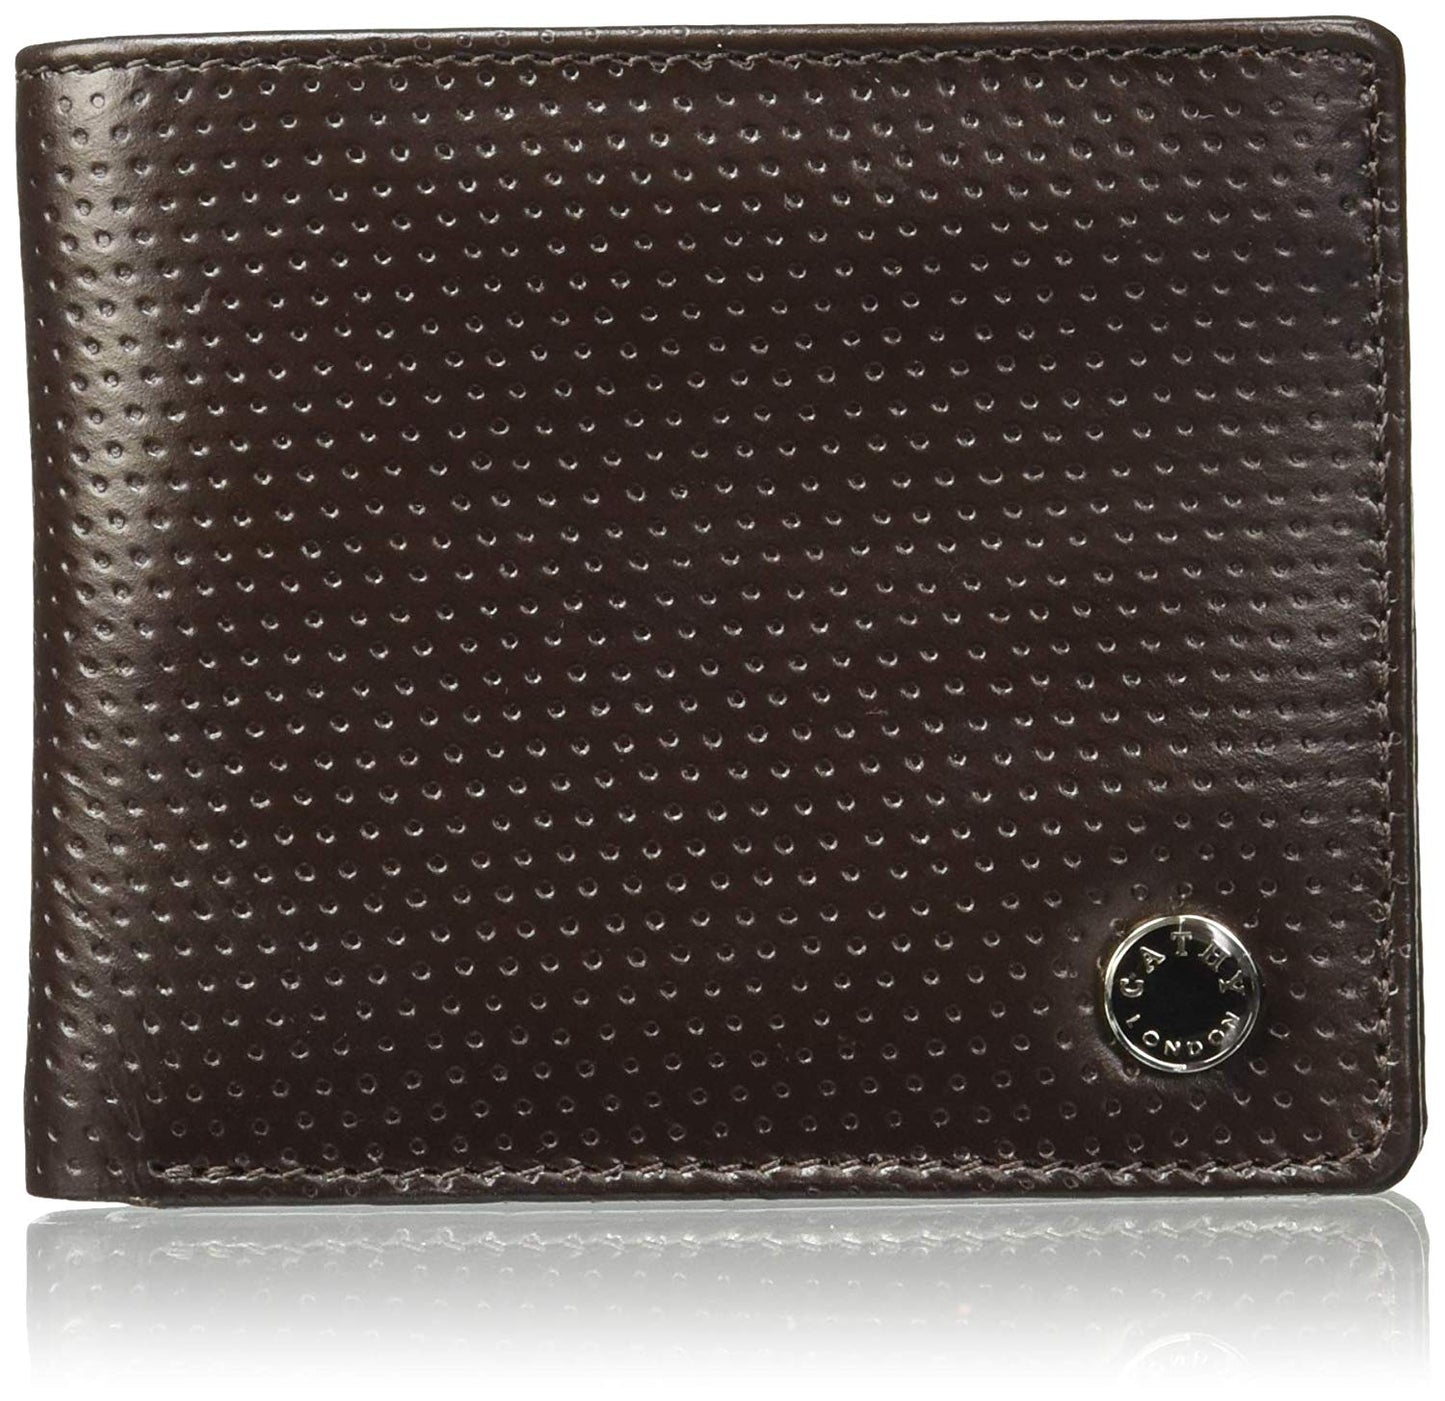 Brown Colour Bi-Fold Italian Leather Slim Wallet ( 6 Card Slot + 1 ID Slot + Coin Pocket + Cash Compartment )